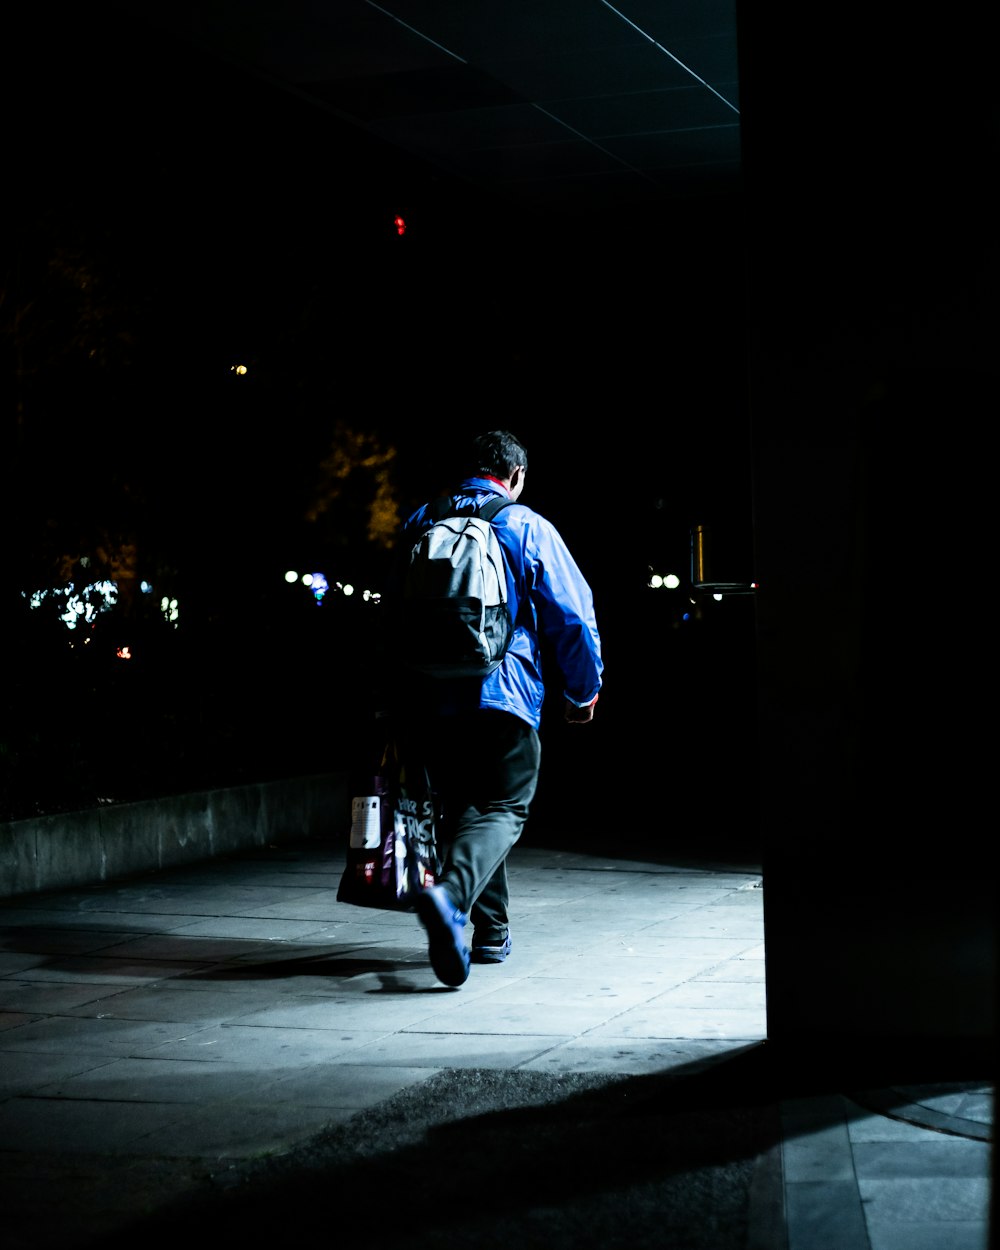 man in blue jacket and black pants walking on sidewalk during night time